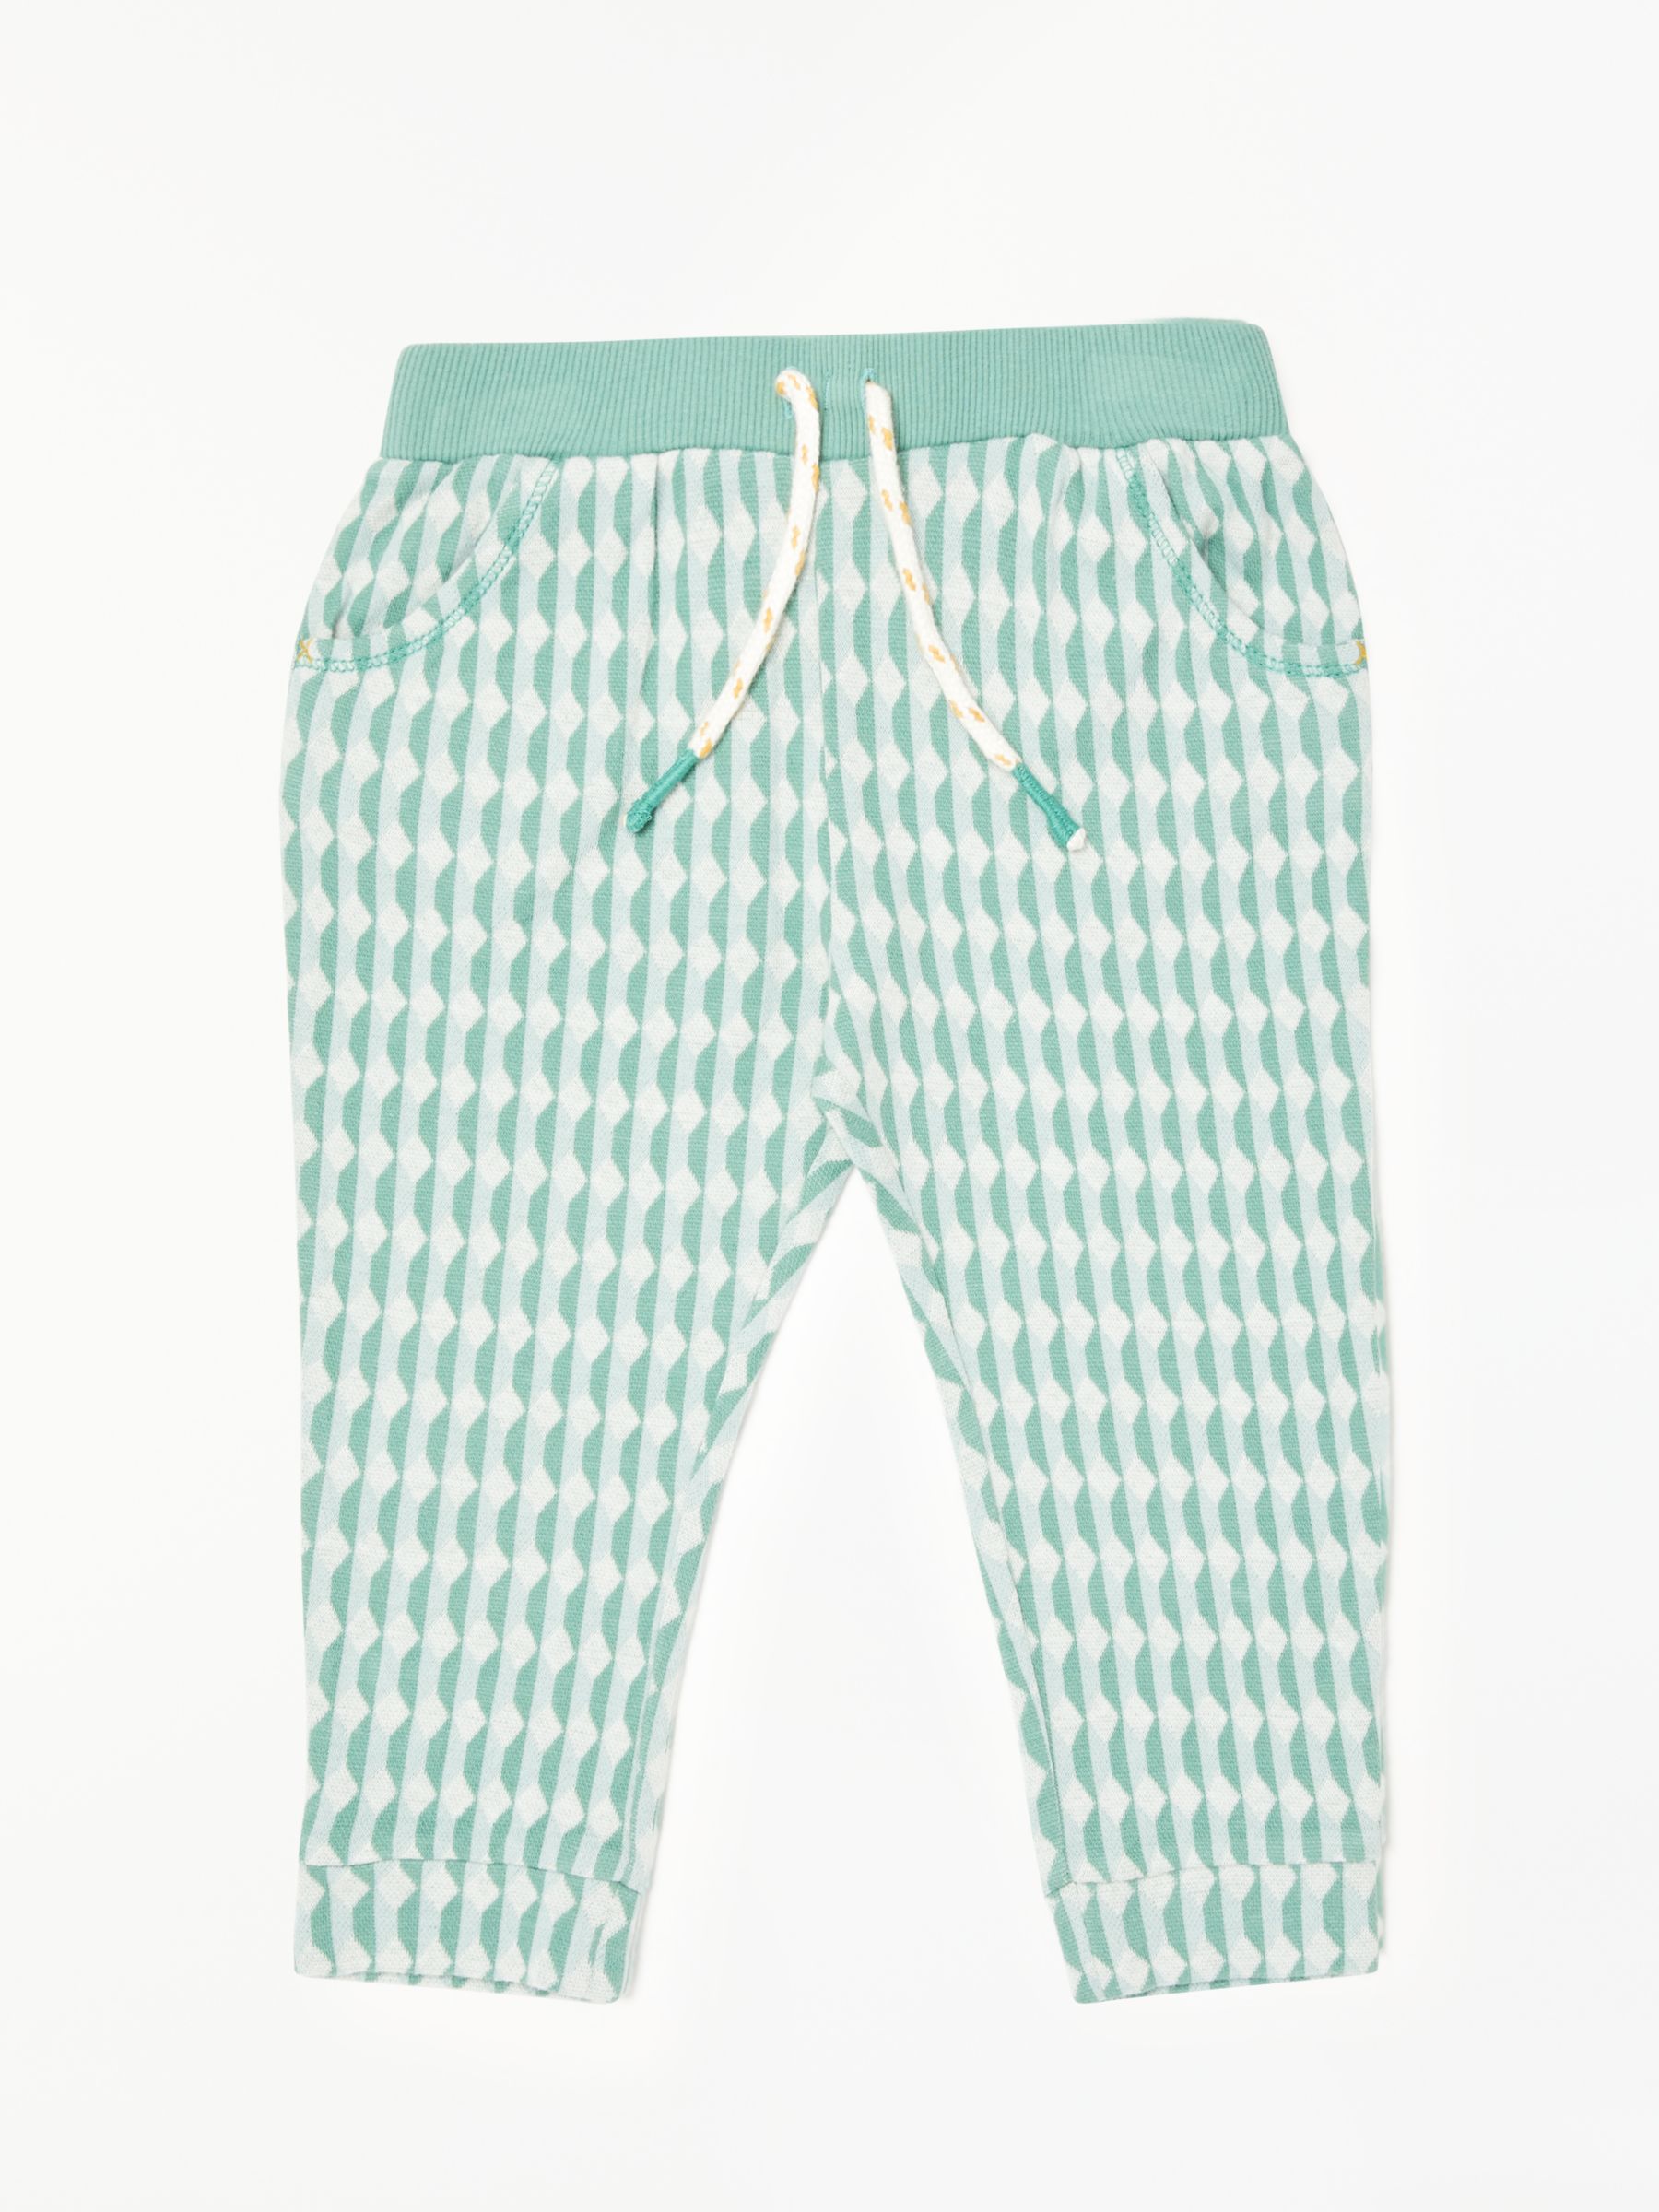 John Lewis & Partners Baby Organic Cotton Jacquard Trousers, Green, 12-18 months